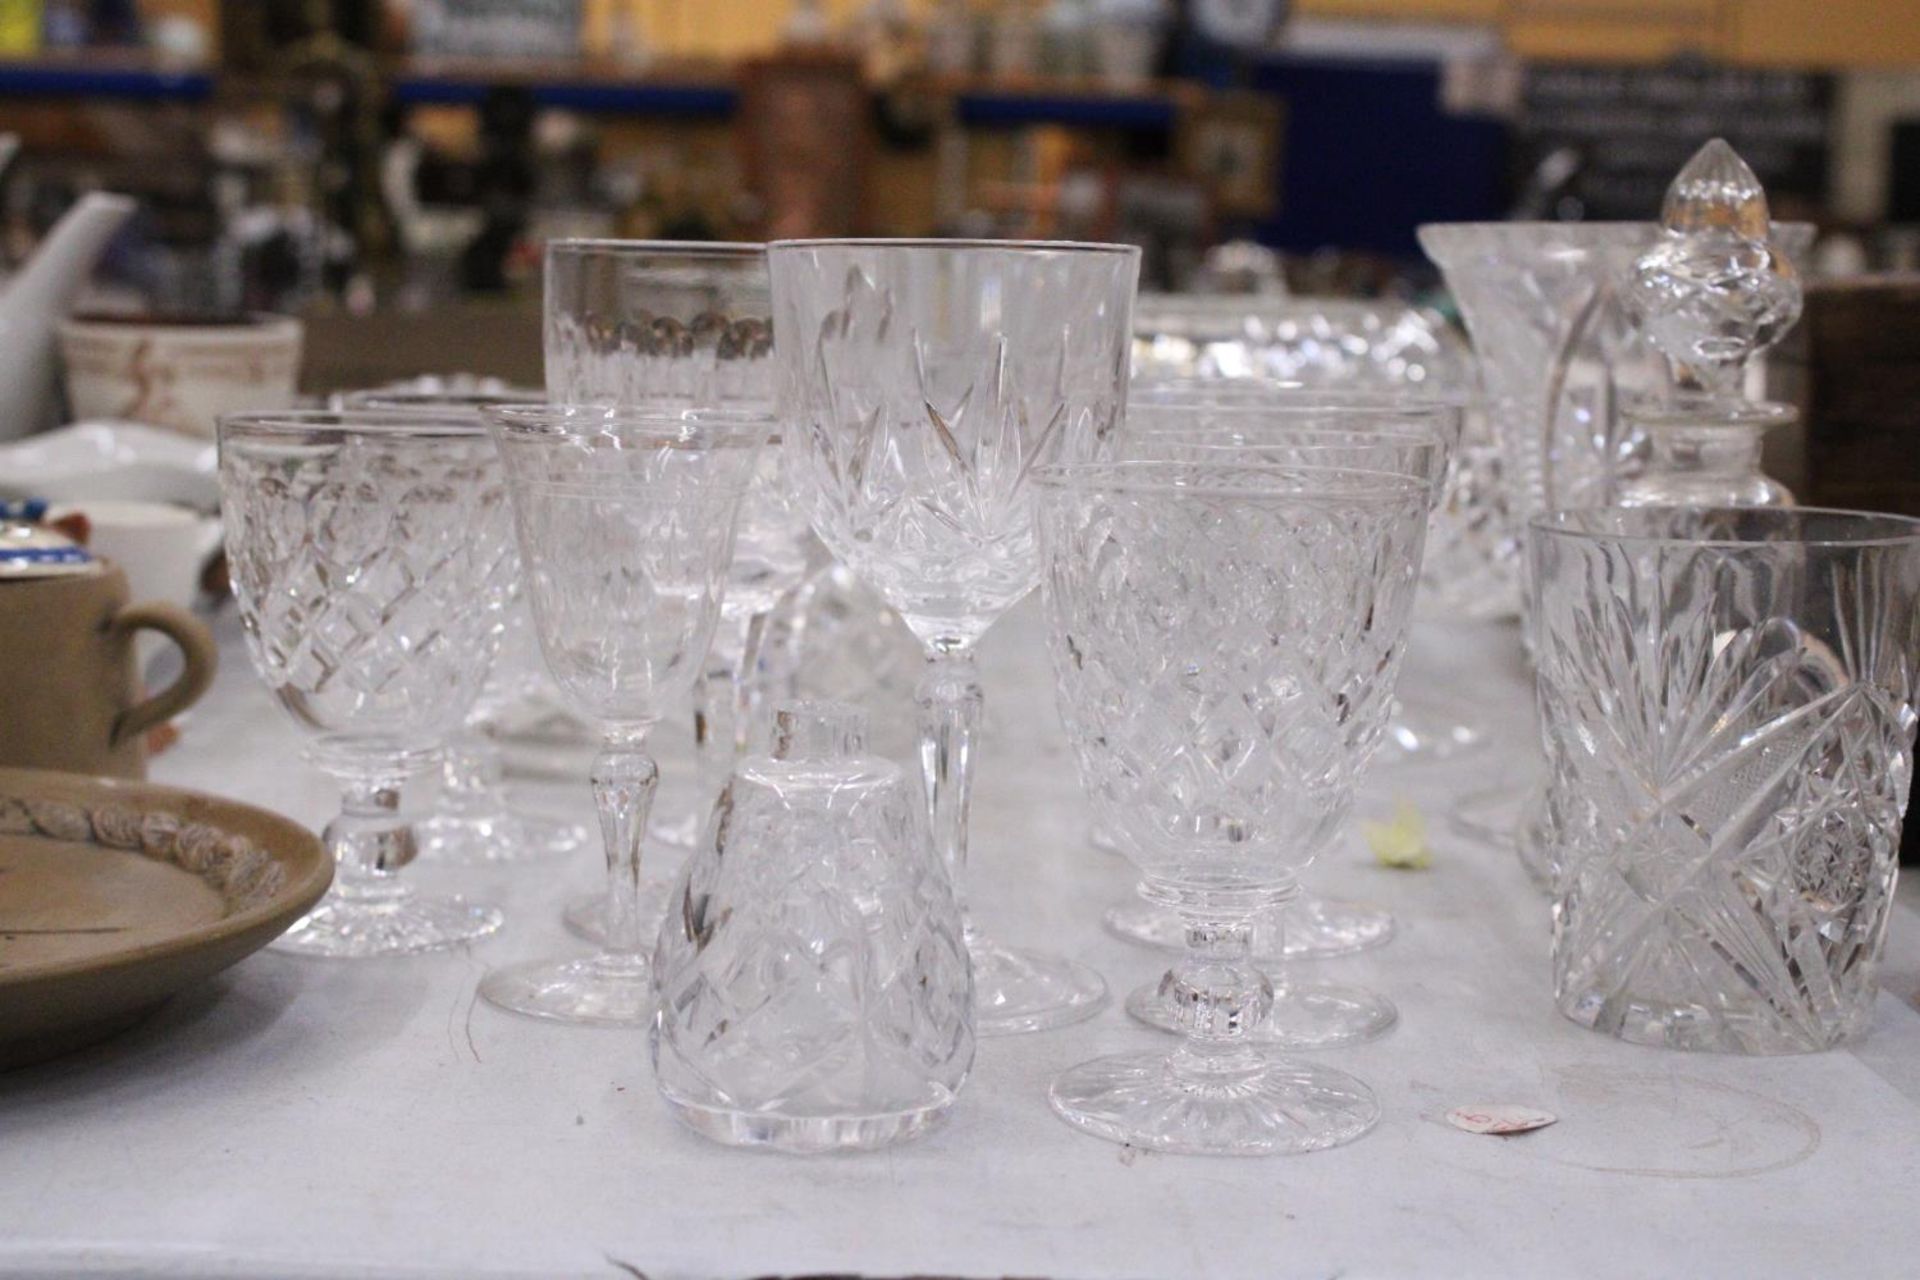 A LARGE QUANTITY OF GLASSWARE TO INCLUDE BOWLS, VASES, WINE GLASSES, ETC - Bild 6 aus 6